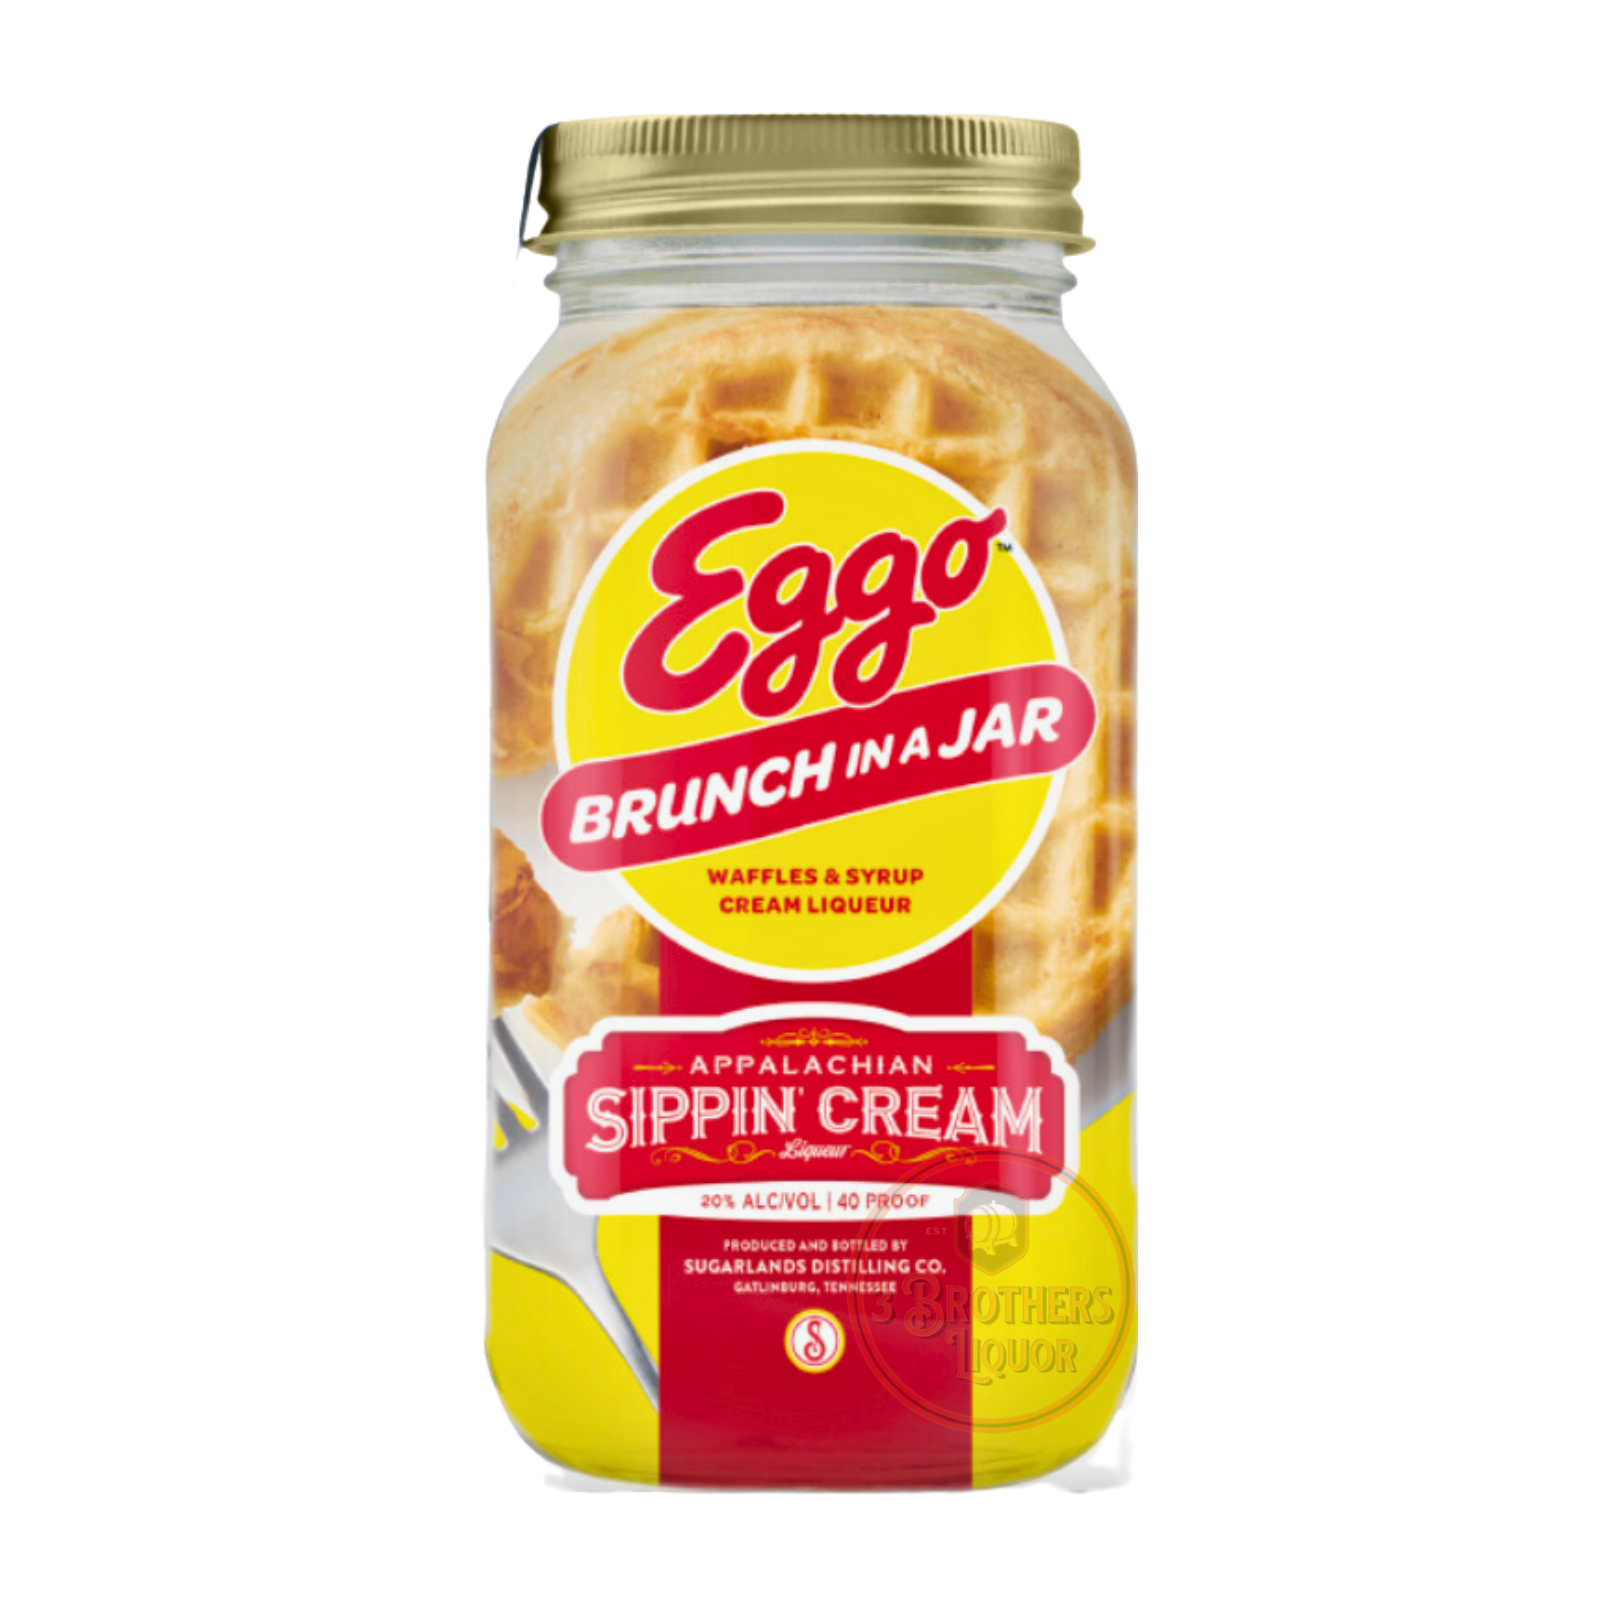 Sugarlands Shine Eggo Waffles & Cream Liqueur Appalachian Sippin Cream